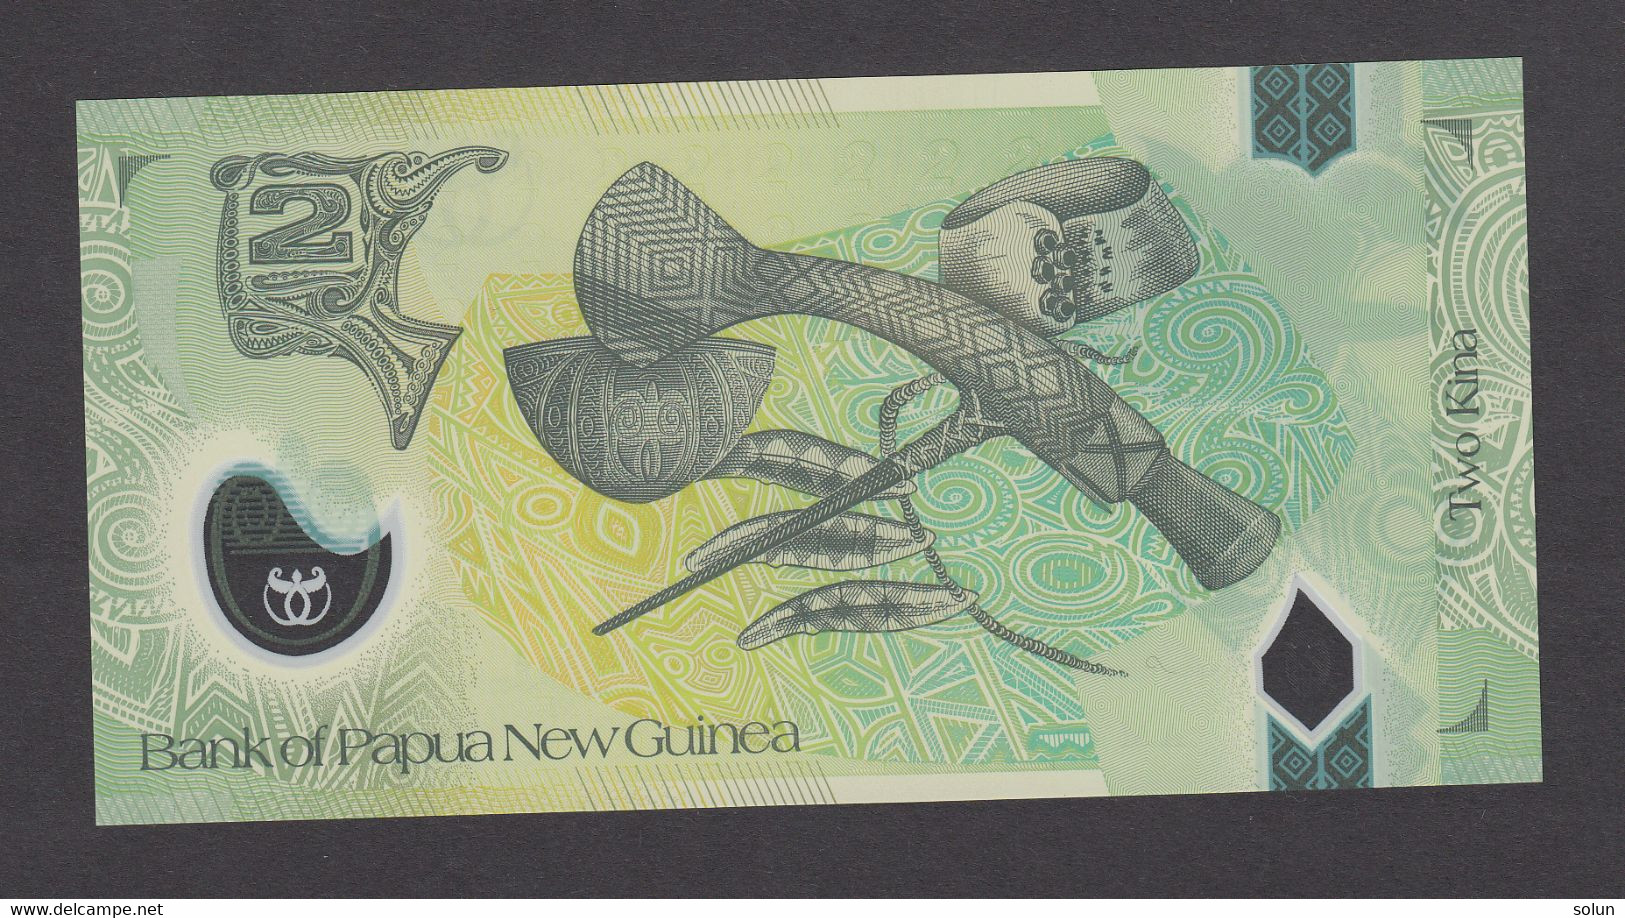 2 TWO KINA  BANK OF PAPUA NEW GUINEA BANKNOTE - Papua New Guinea